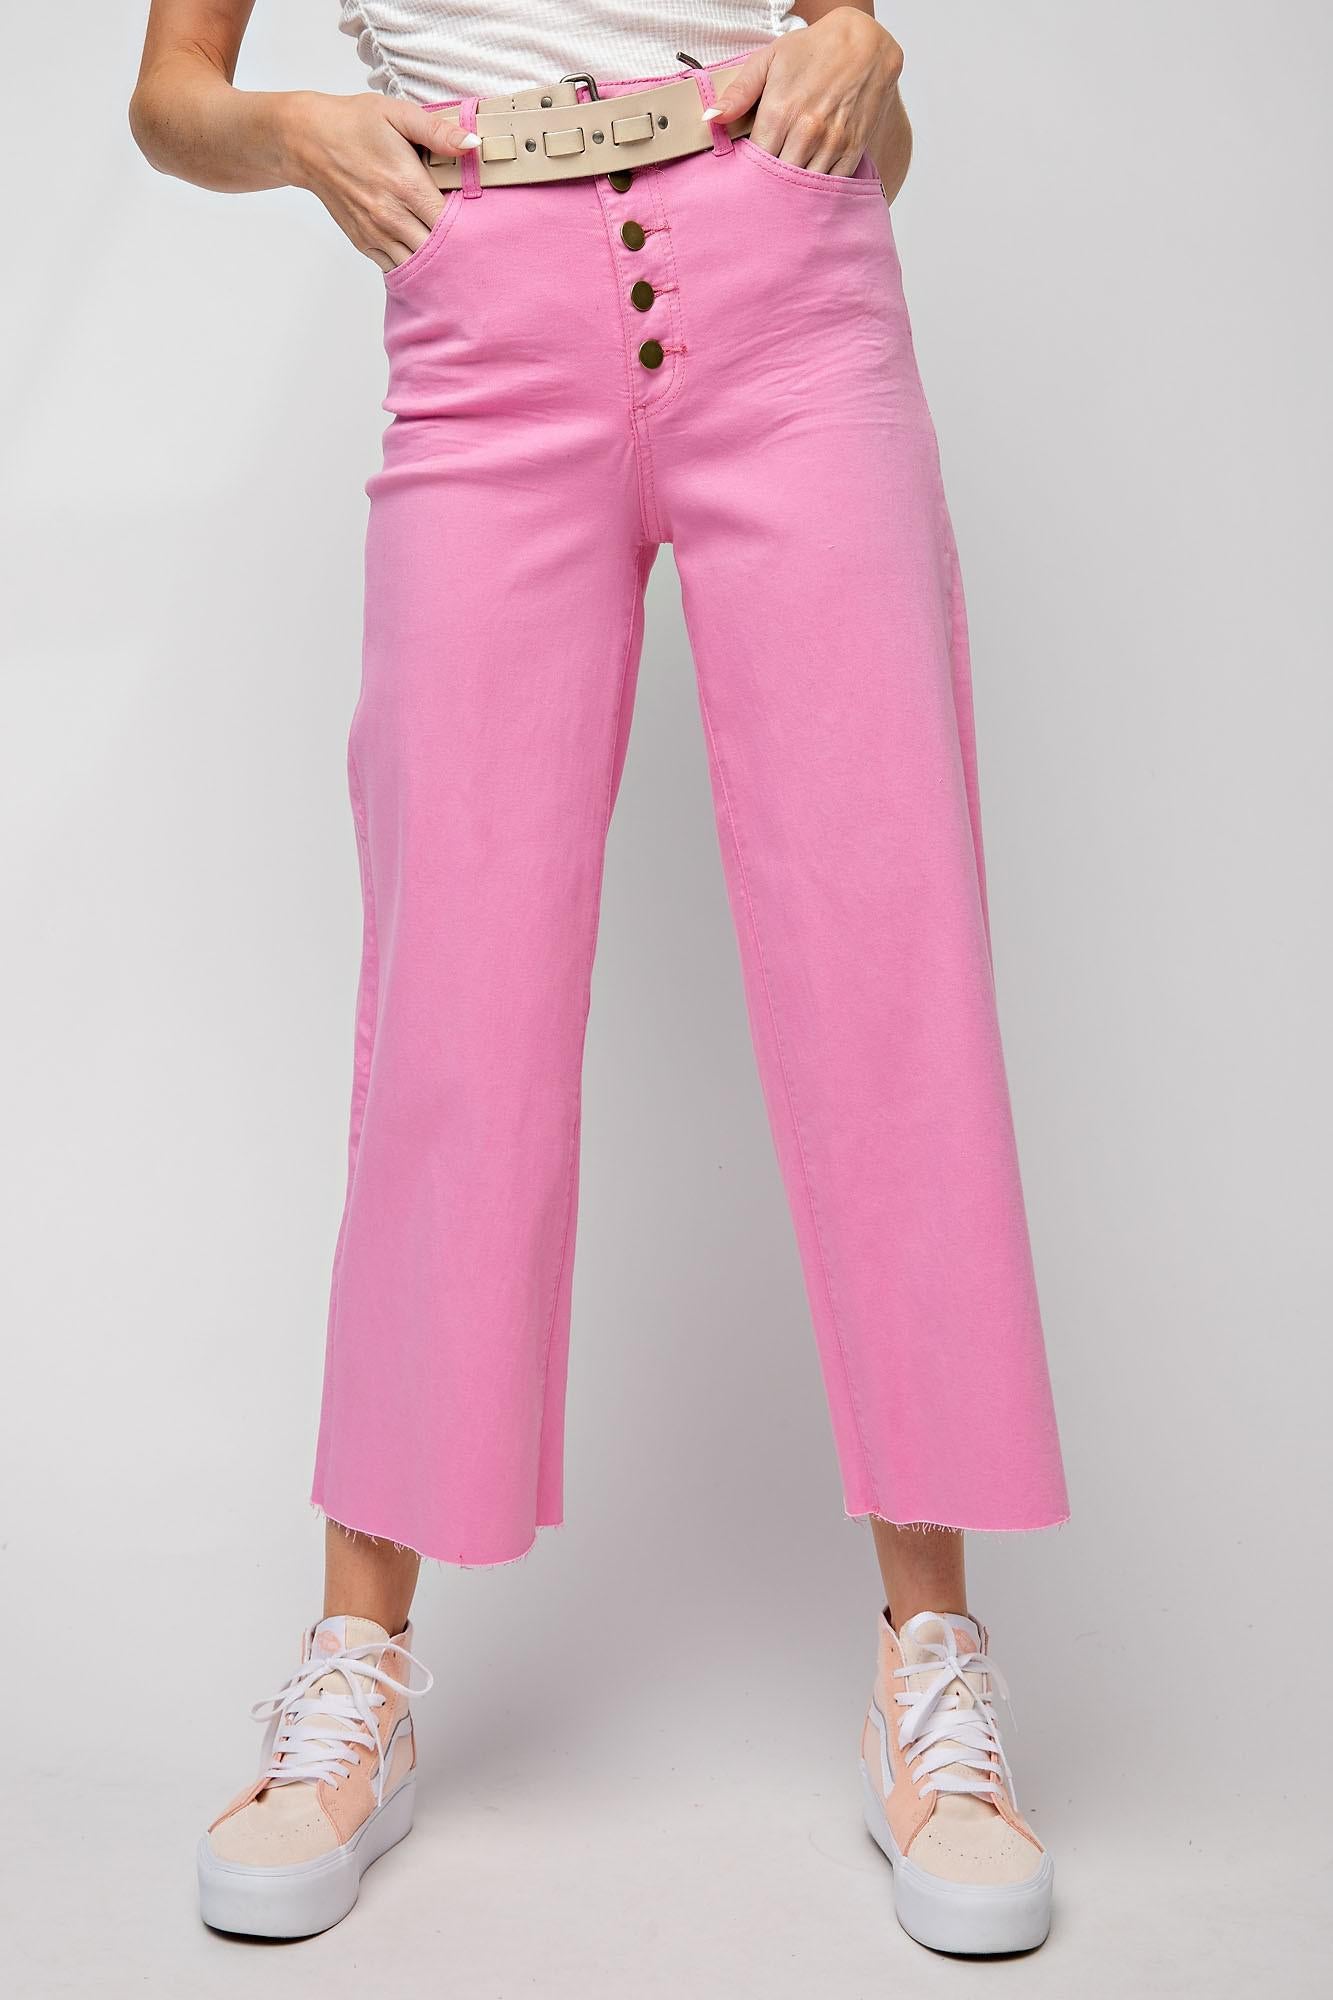 Barbie Pink Button Front Pants